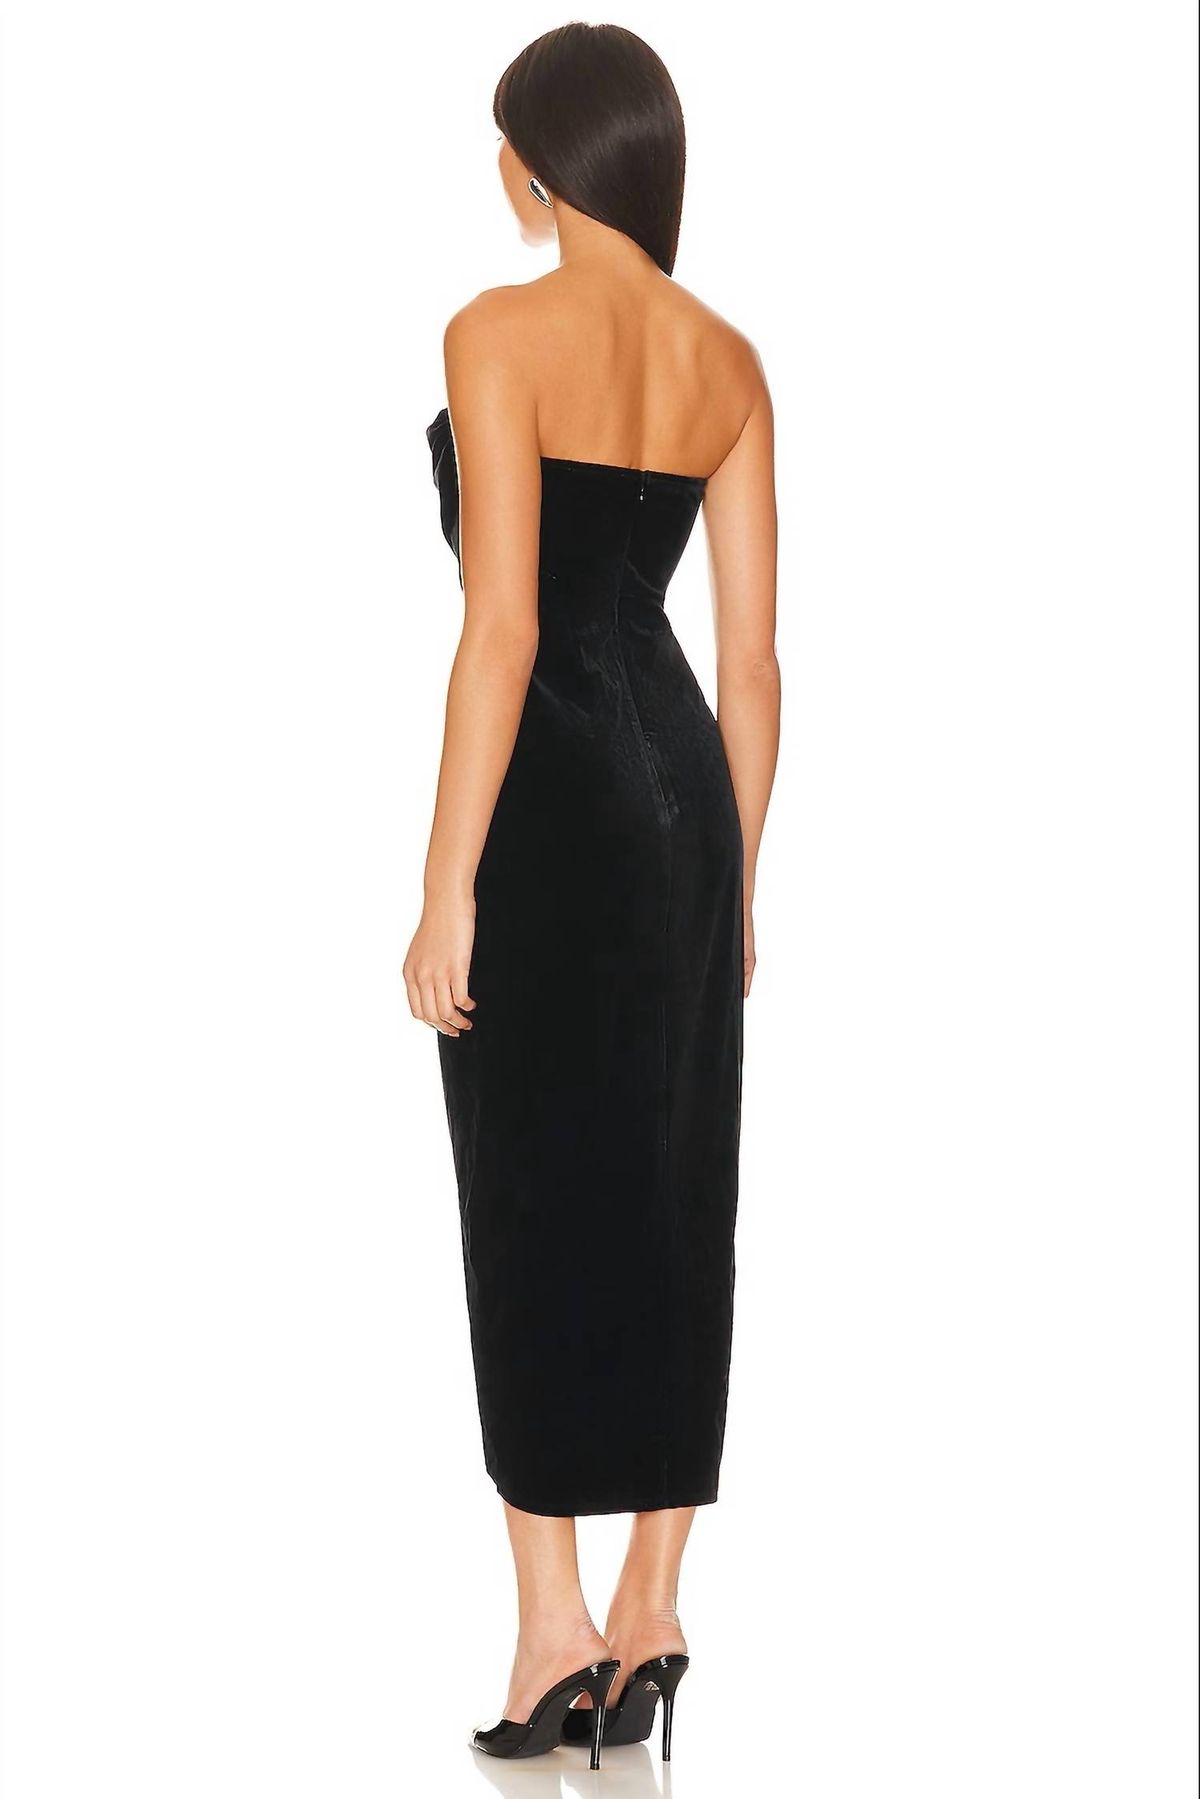 Style 1-1184961153-2696 ASTR Size L Velvet Black Cocktail Dress on Queenly